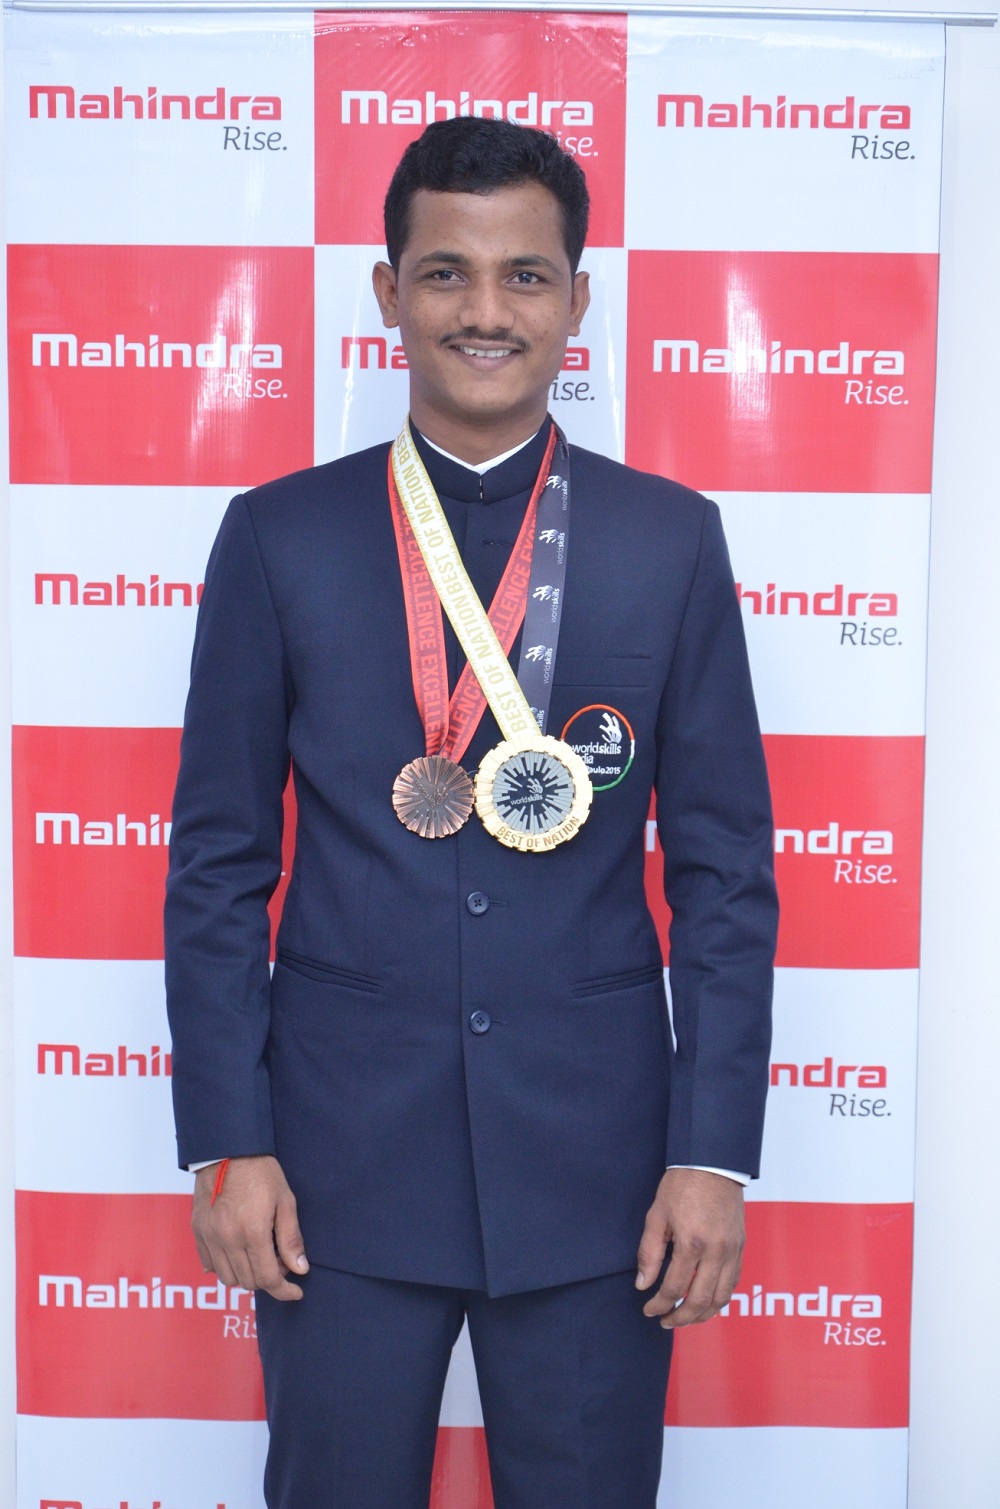 Mahindra employee wins Accolades at World Skill Competition